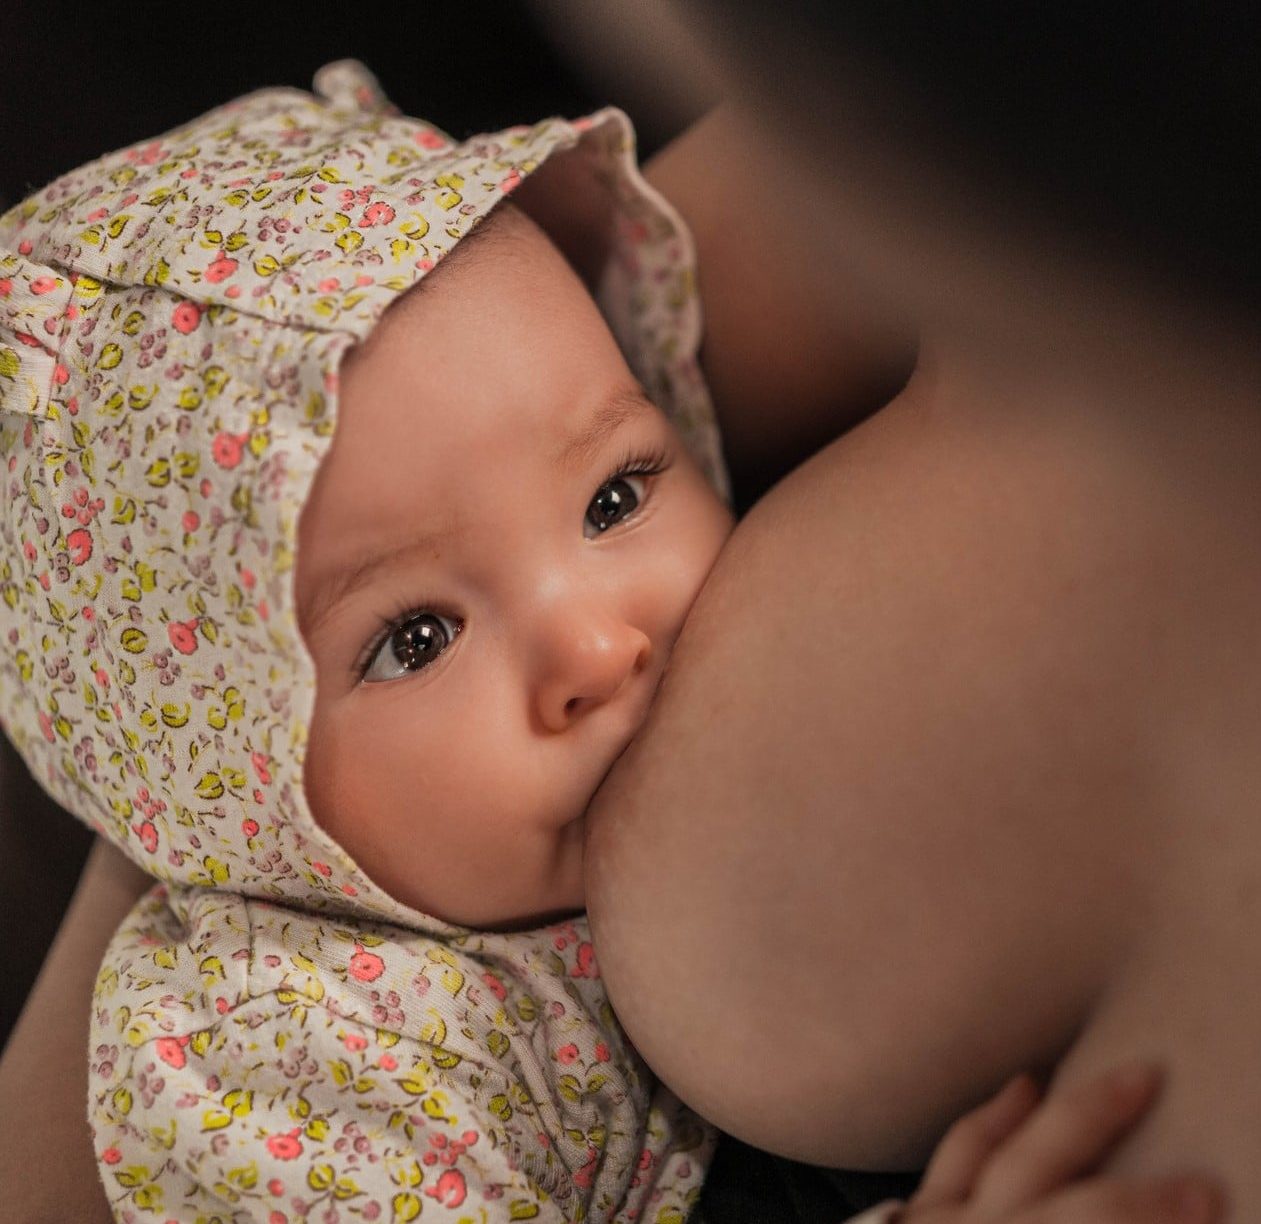 Breastfeeding and sleep training